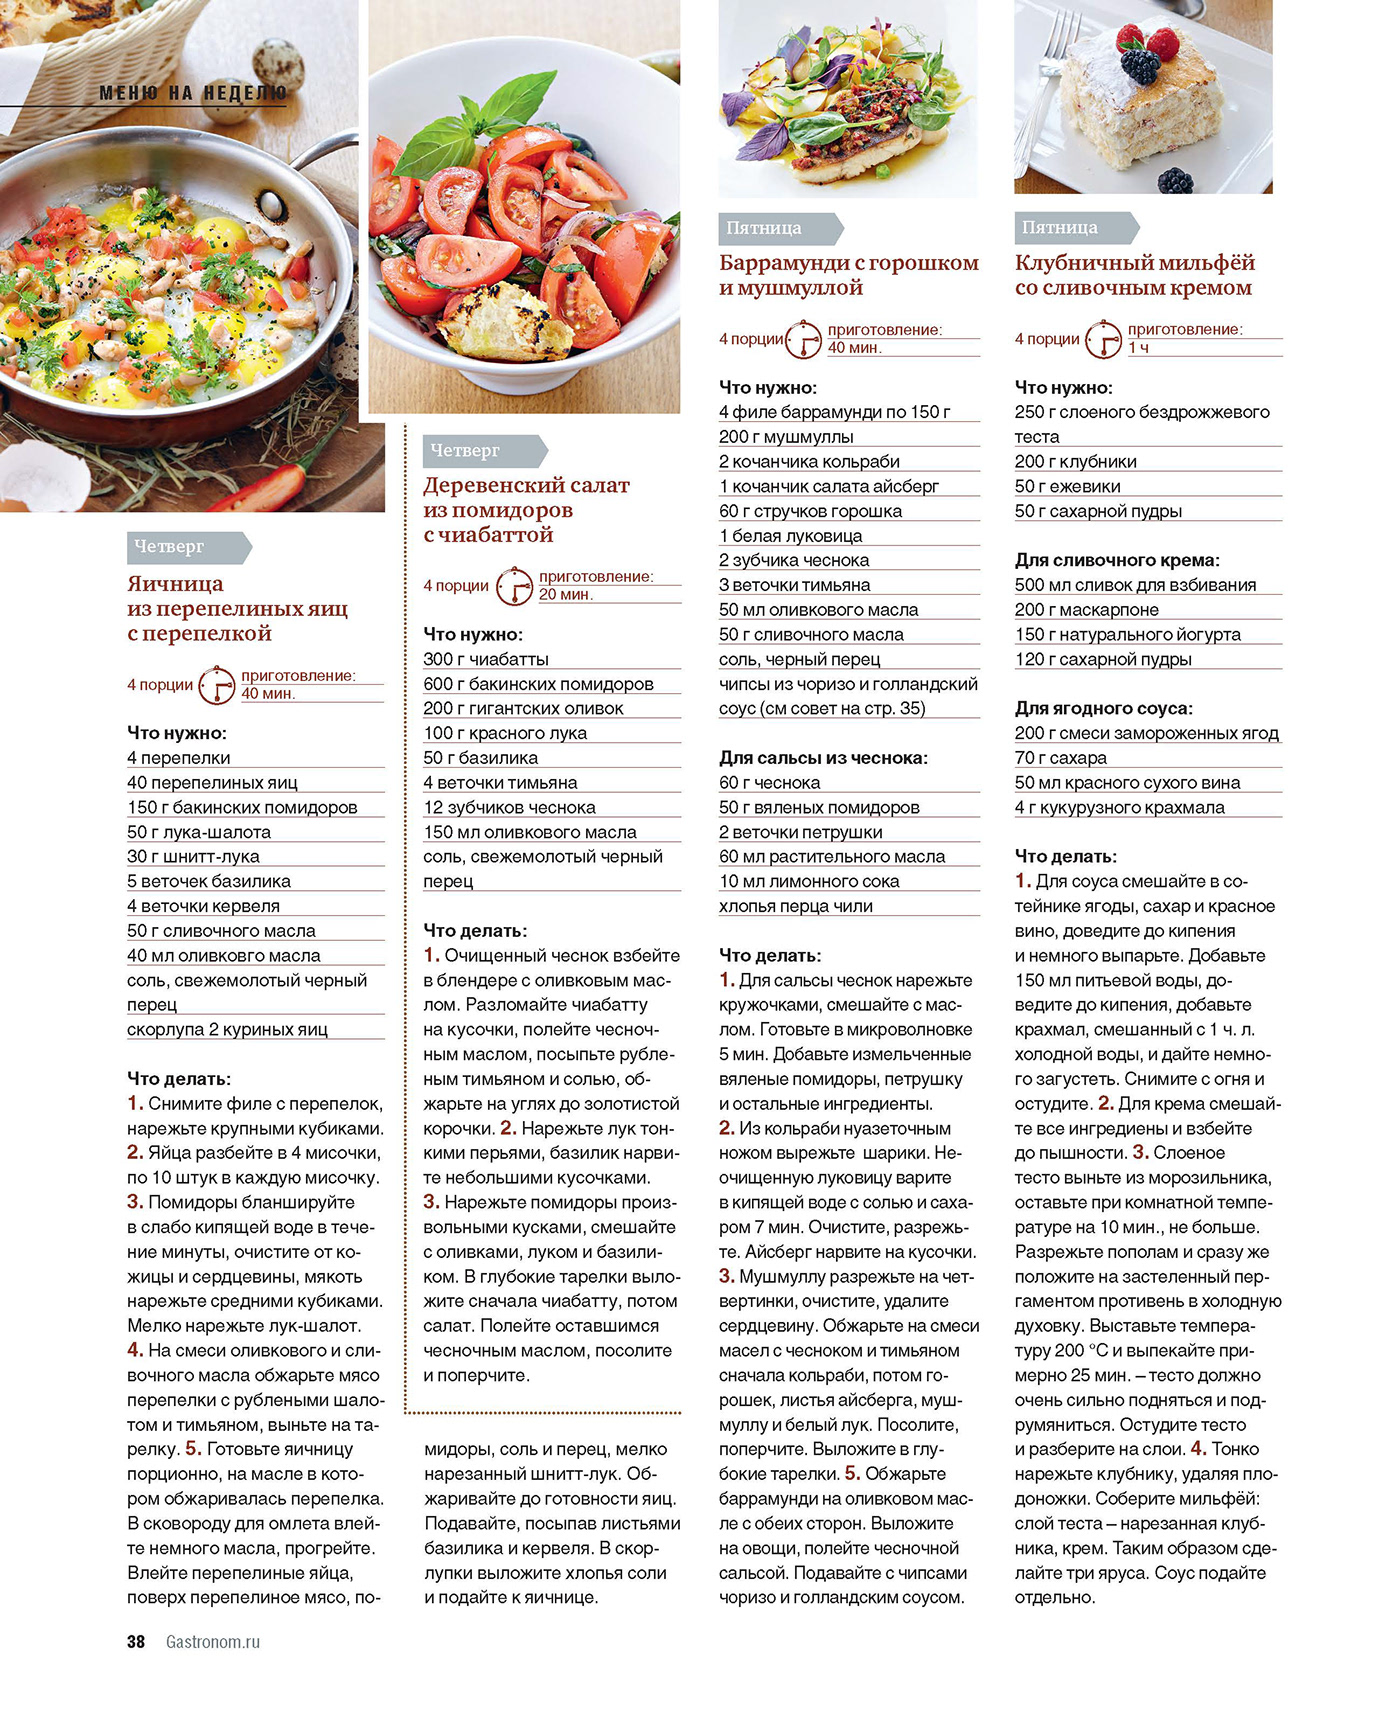 Food  restaurant журнал magazine ресторан chef cooking recipes еда меню